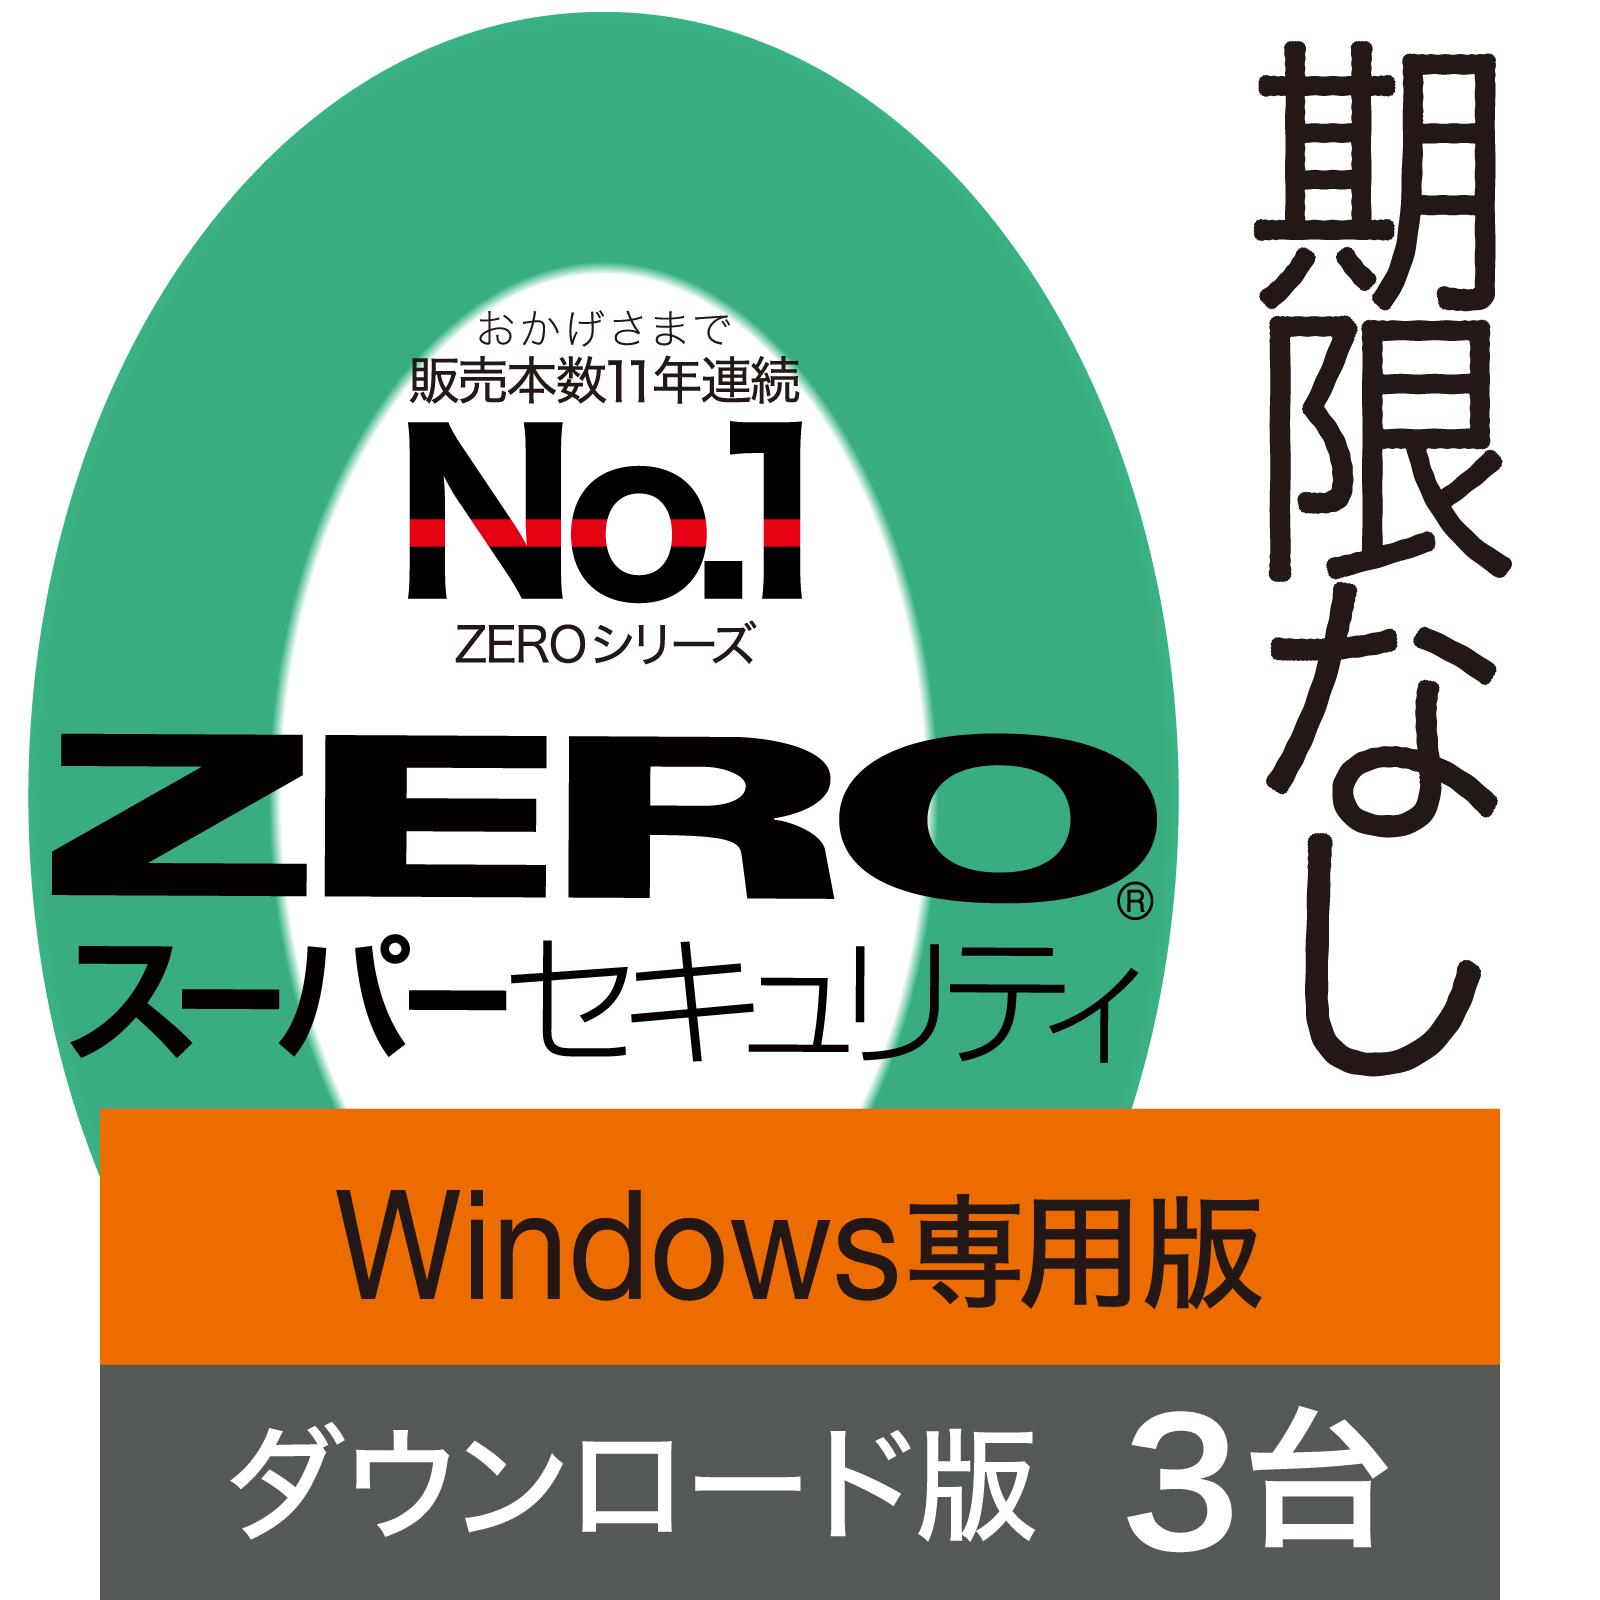   ZERO X[p[ZLeB Windowsp 3p   E[h DL SNR [WindowsΉ][ZLeB\tg]ECX΍ ZLeB΍ ECX΍\tg EBX΍\tg XV